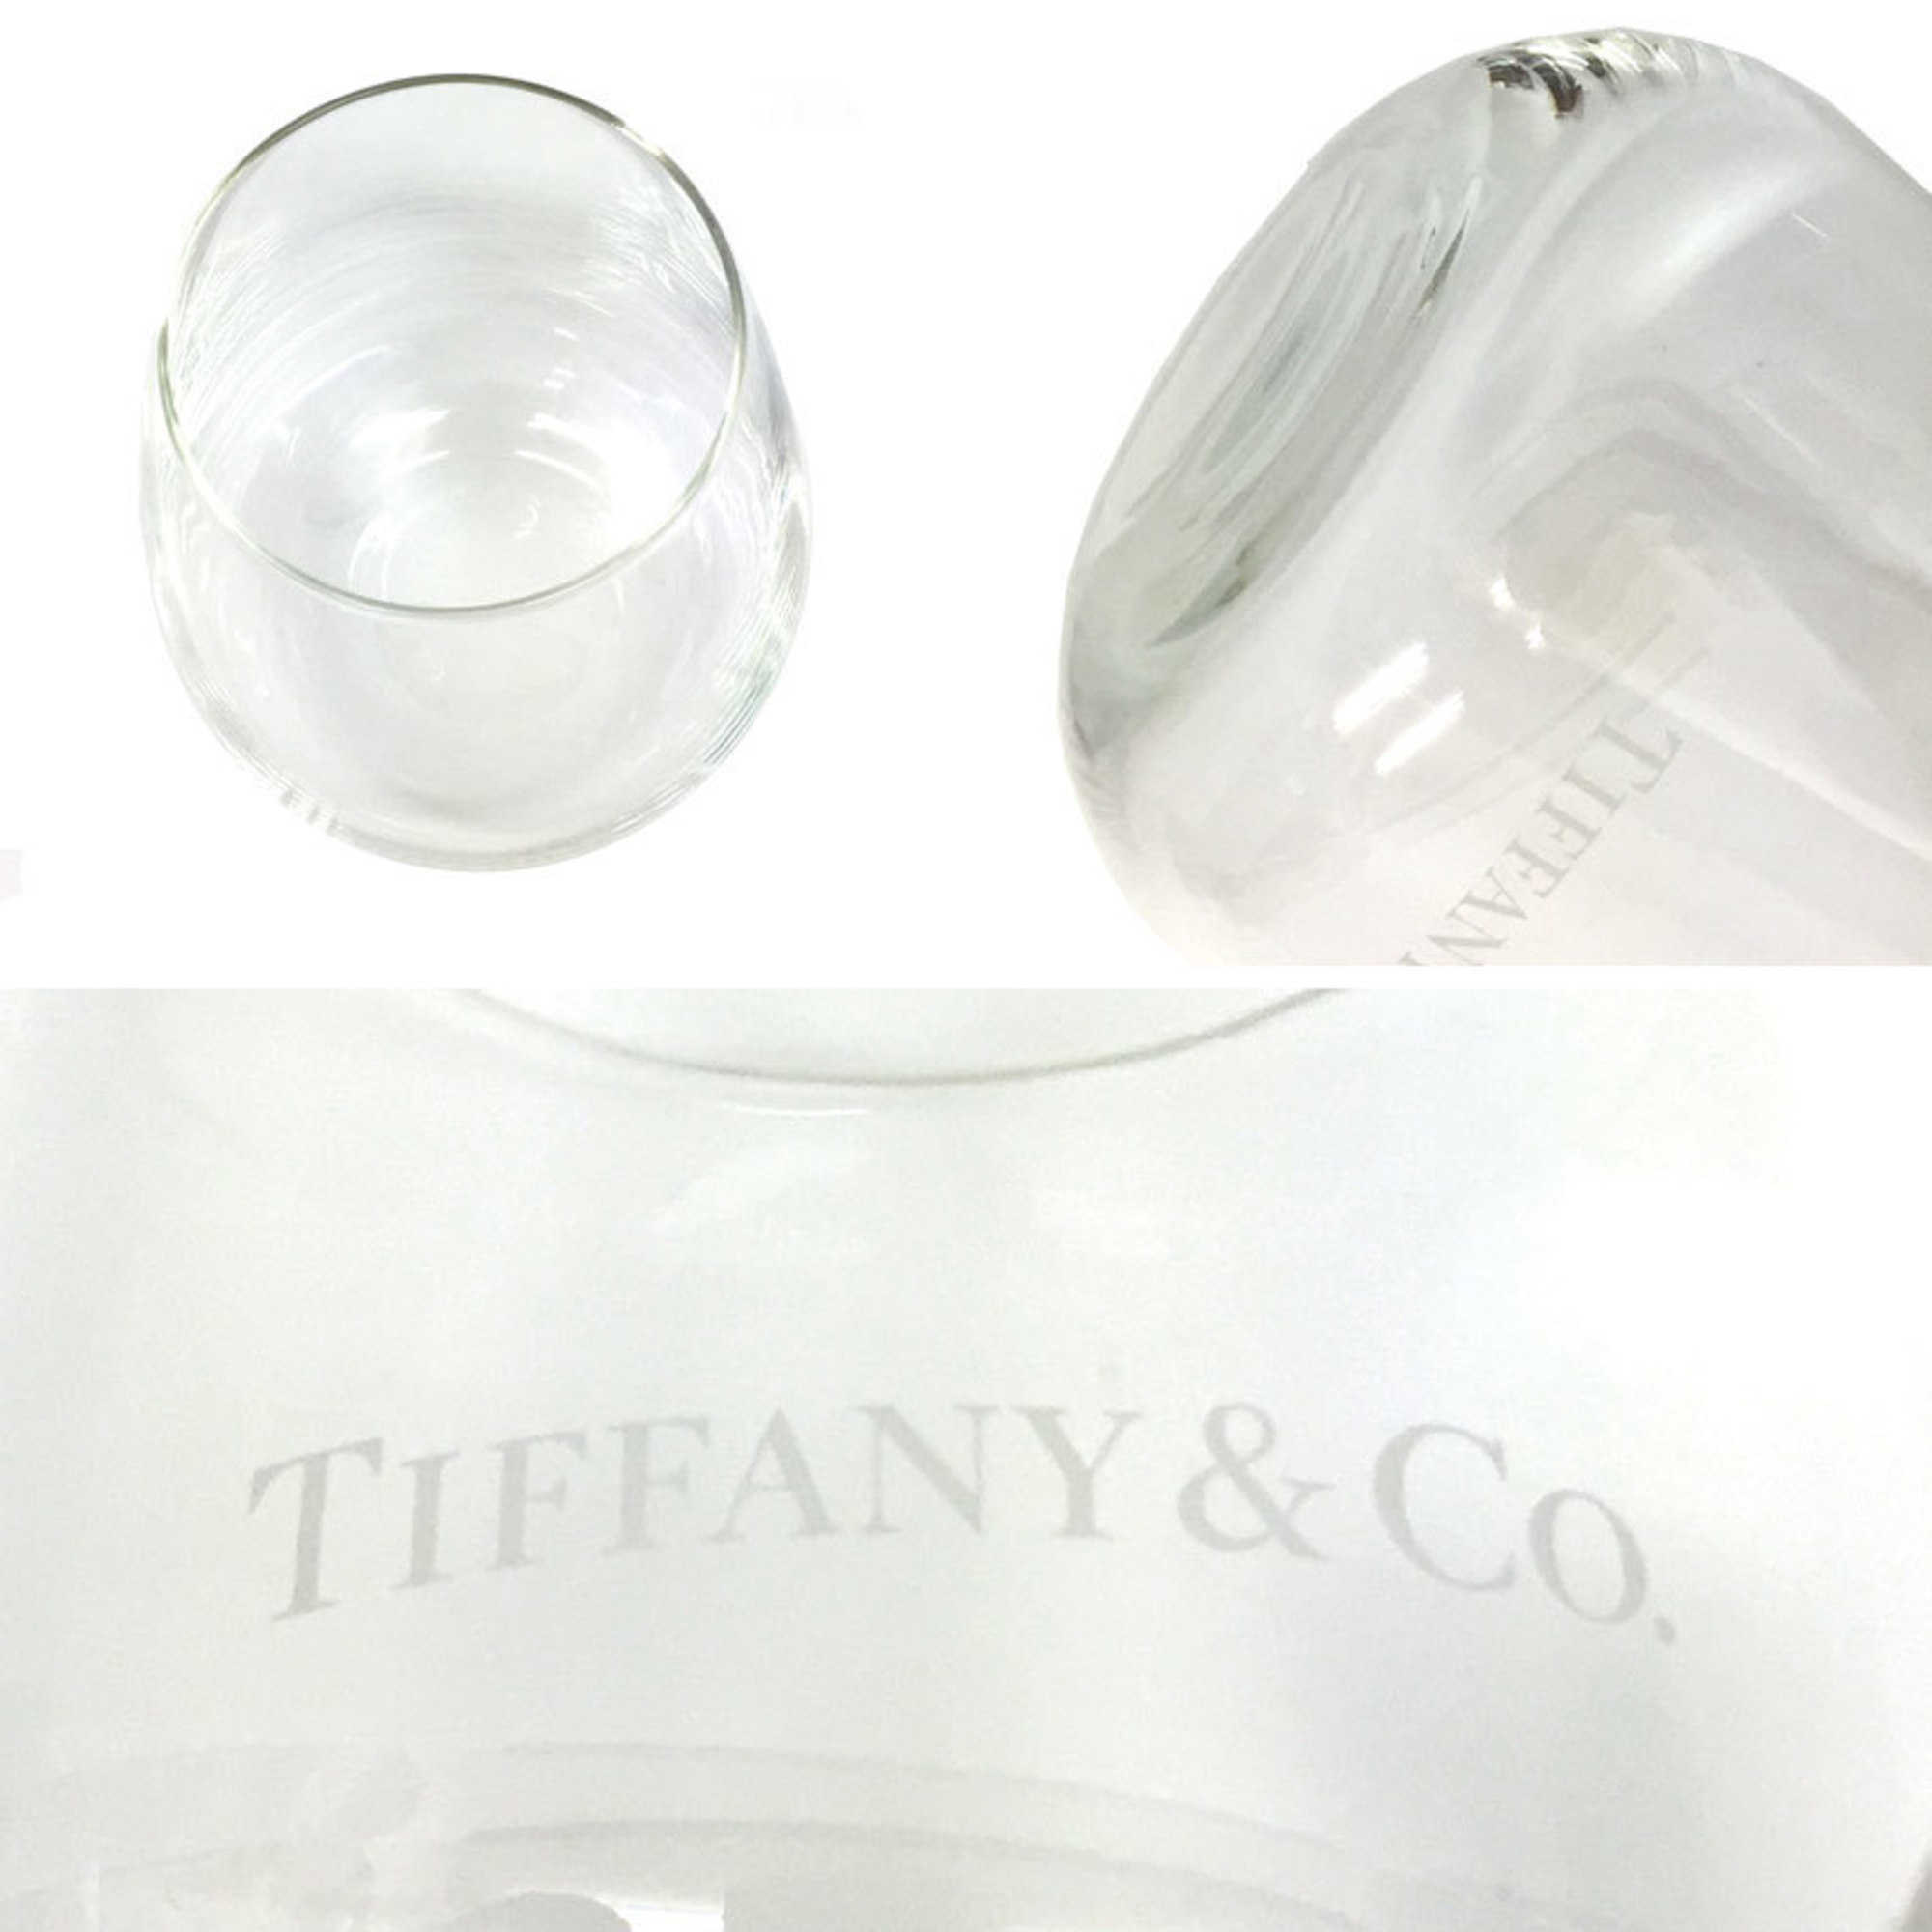 TIFFANY & Co. Tiffany T&CO. Glass set Tumbler